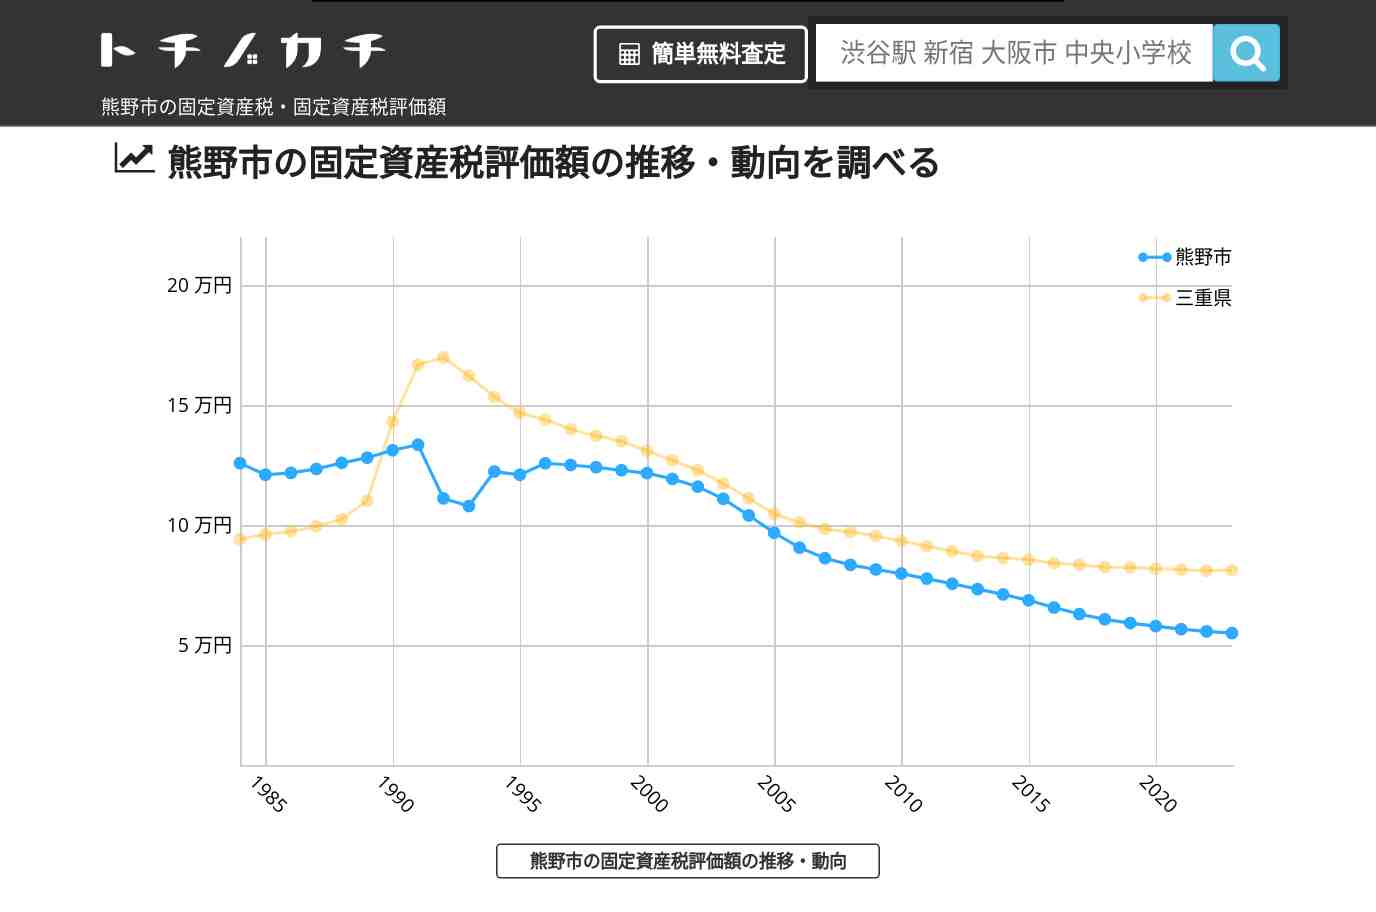 荒坂小学校(三重県 熊野市)周辺の固定資産税・固定資産税評価額 | トチノカチ